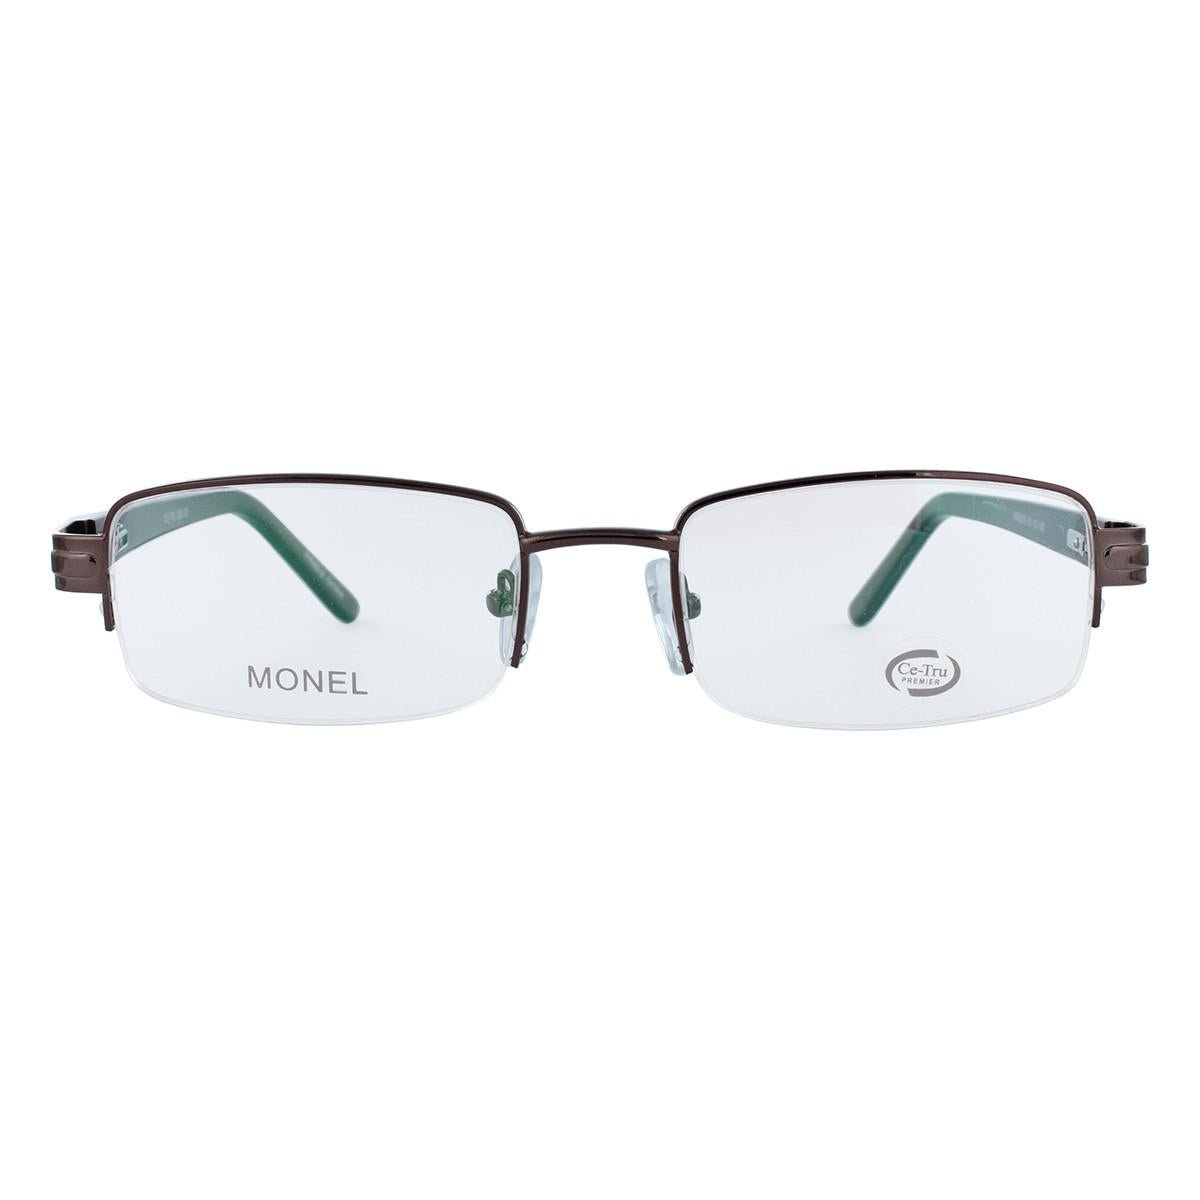 CE-TRU 808 Eyeglasses